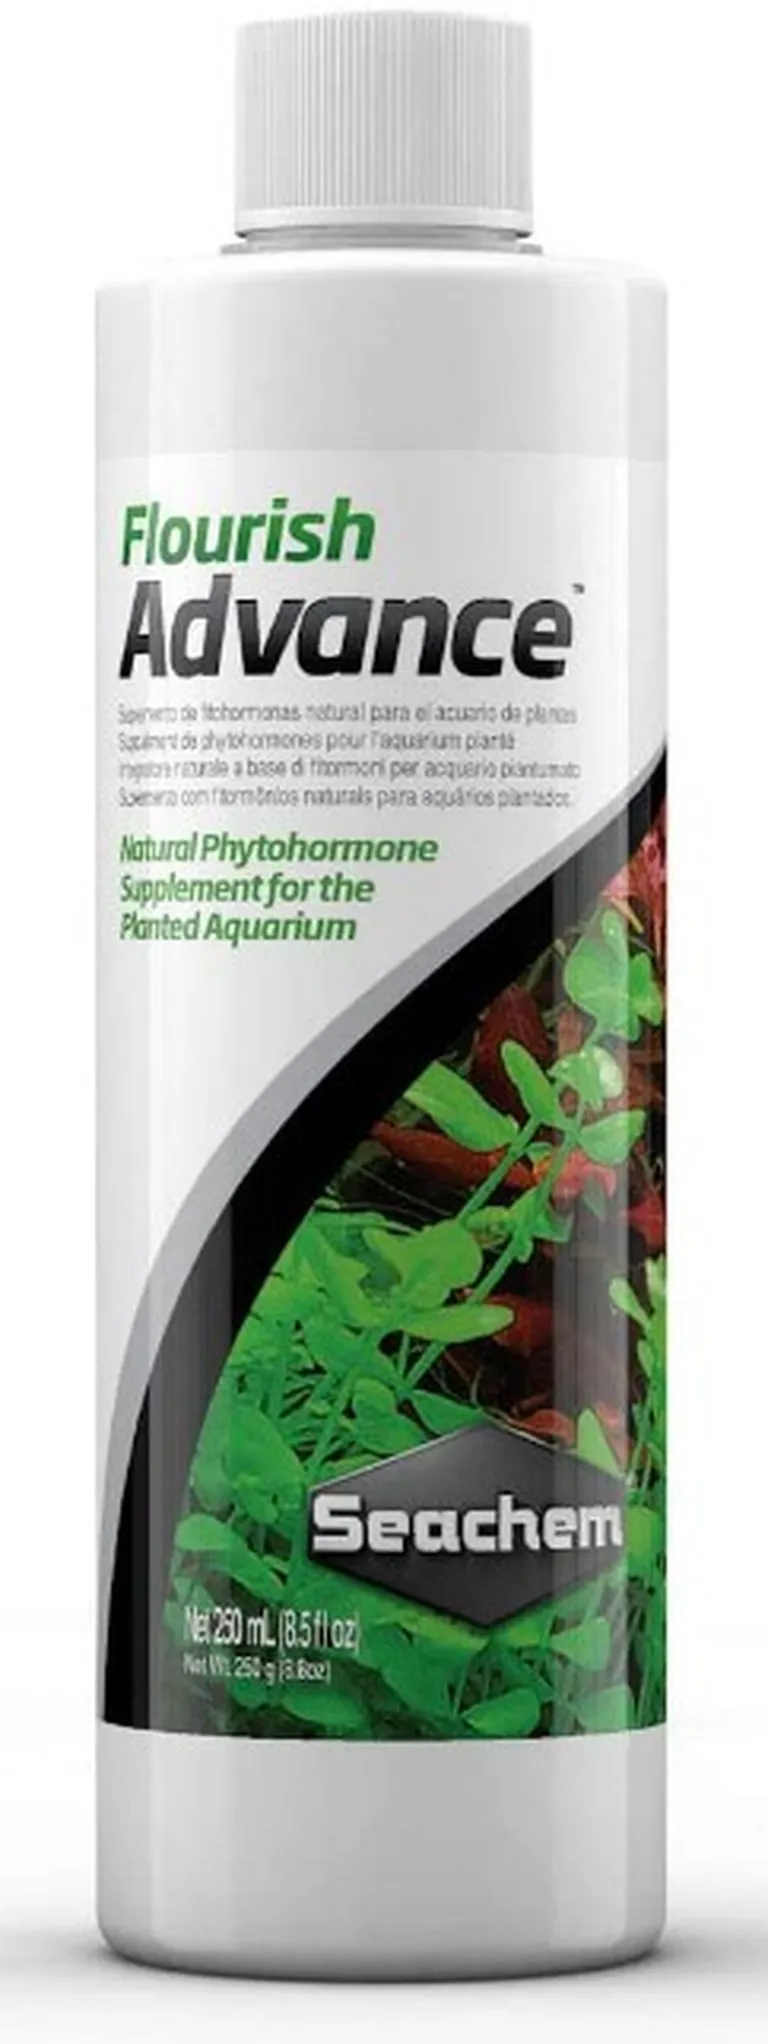 Seachem Flourish Advance Growth Enhancer for Live Aquarium Plants Photo 1